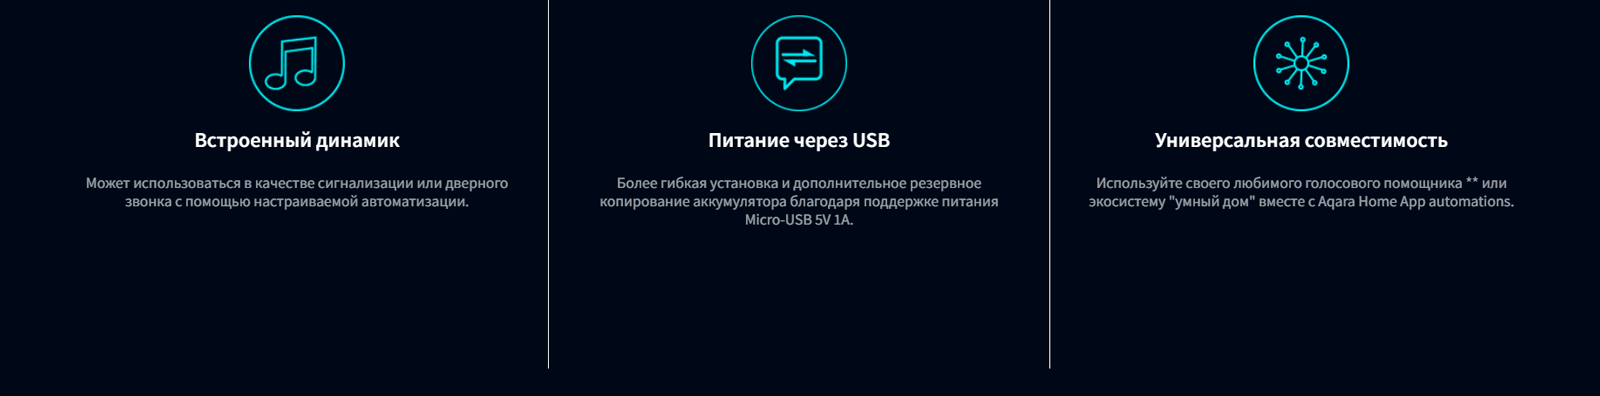  .   USB.  .